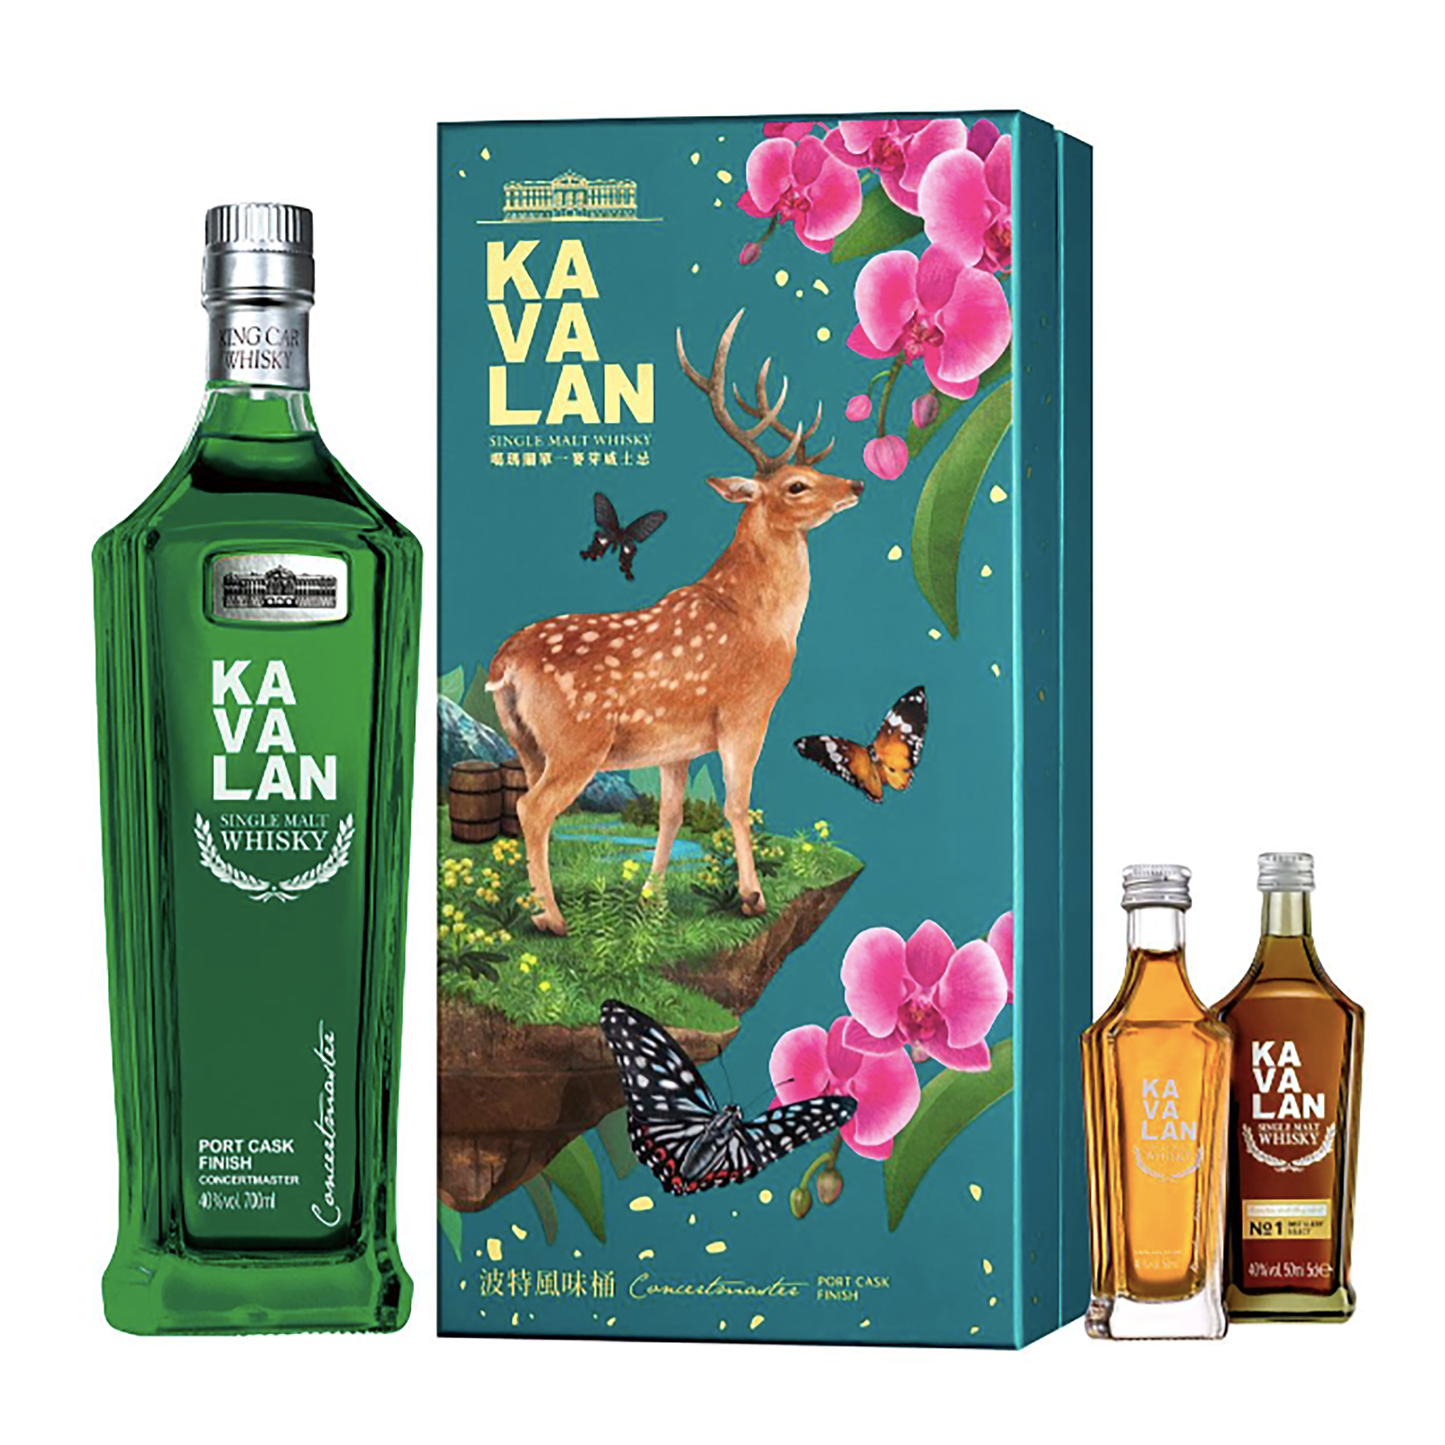 Kavalan Native Species Sika Deer Concertmaster Port Cask Finish Single Malt Taiwanese Whisky Gift Set (700ml + 2x 50ml) - CBD Cellars